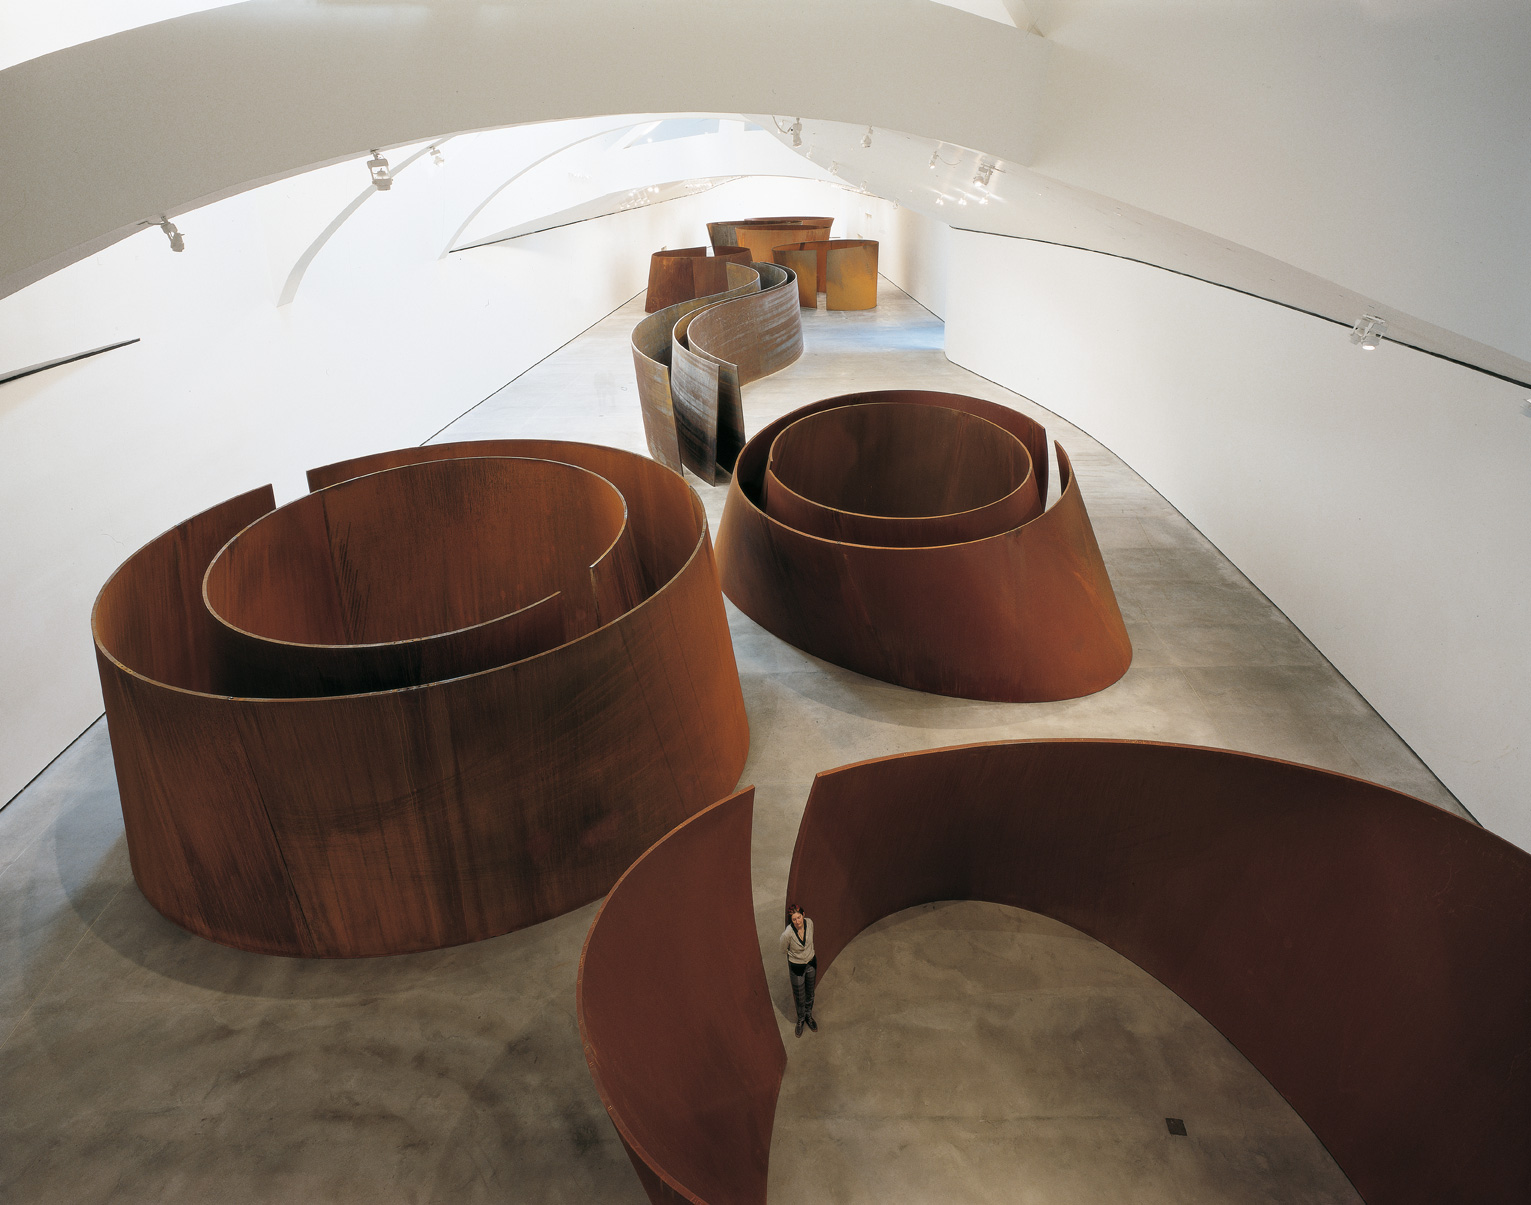 These Are Richard Serras Torqued Ellipses